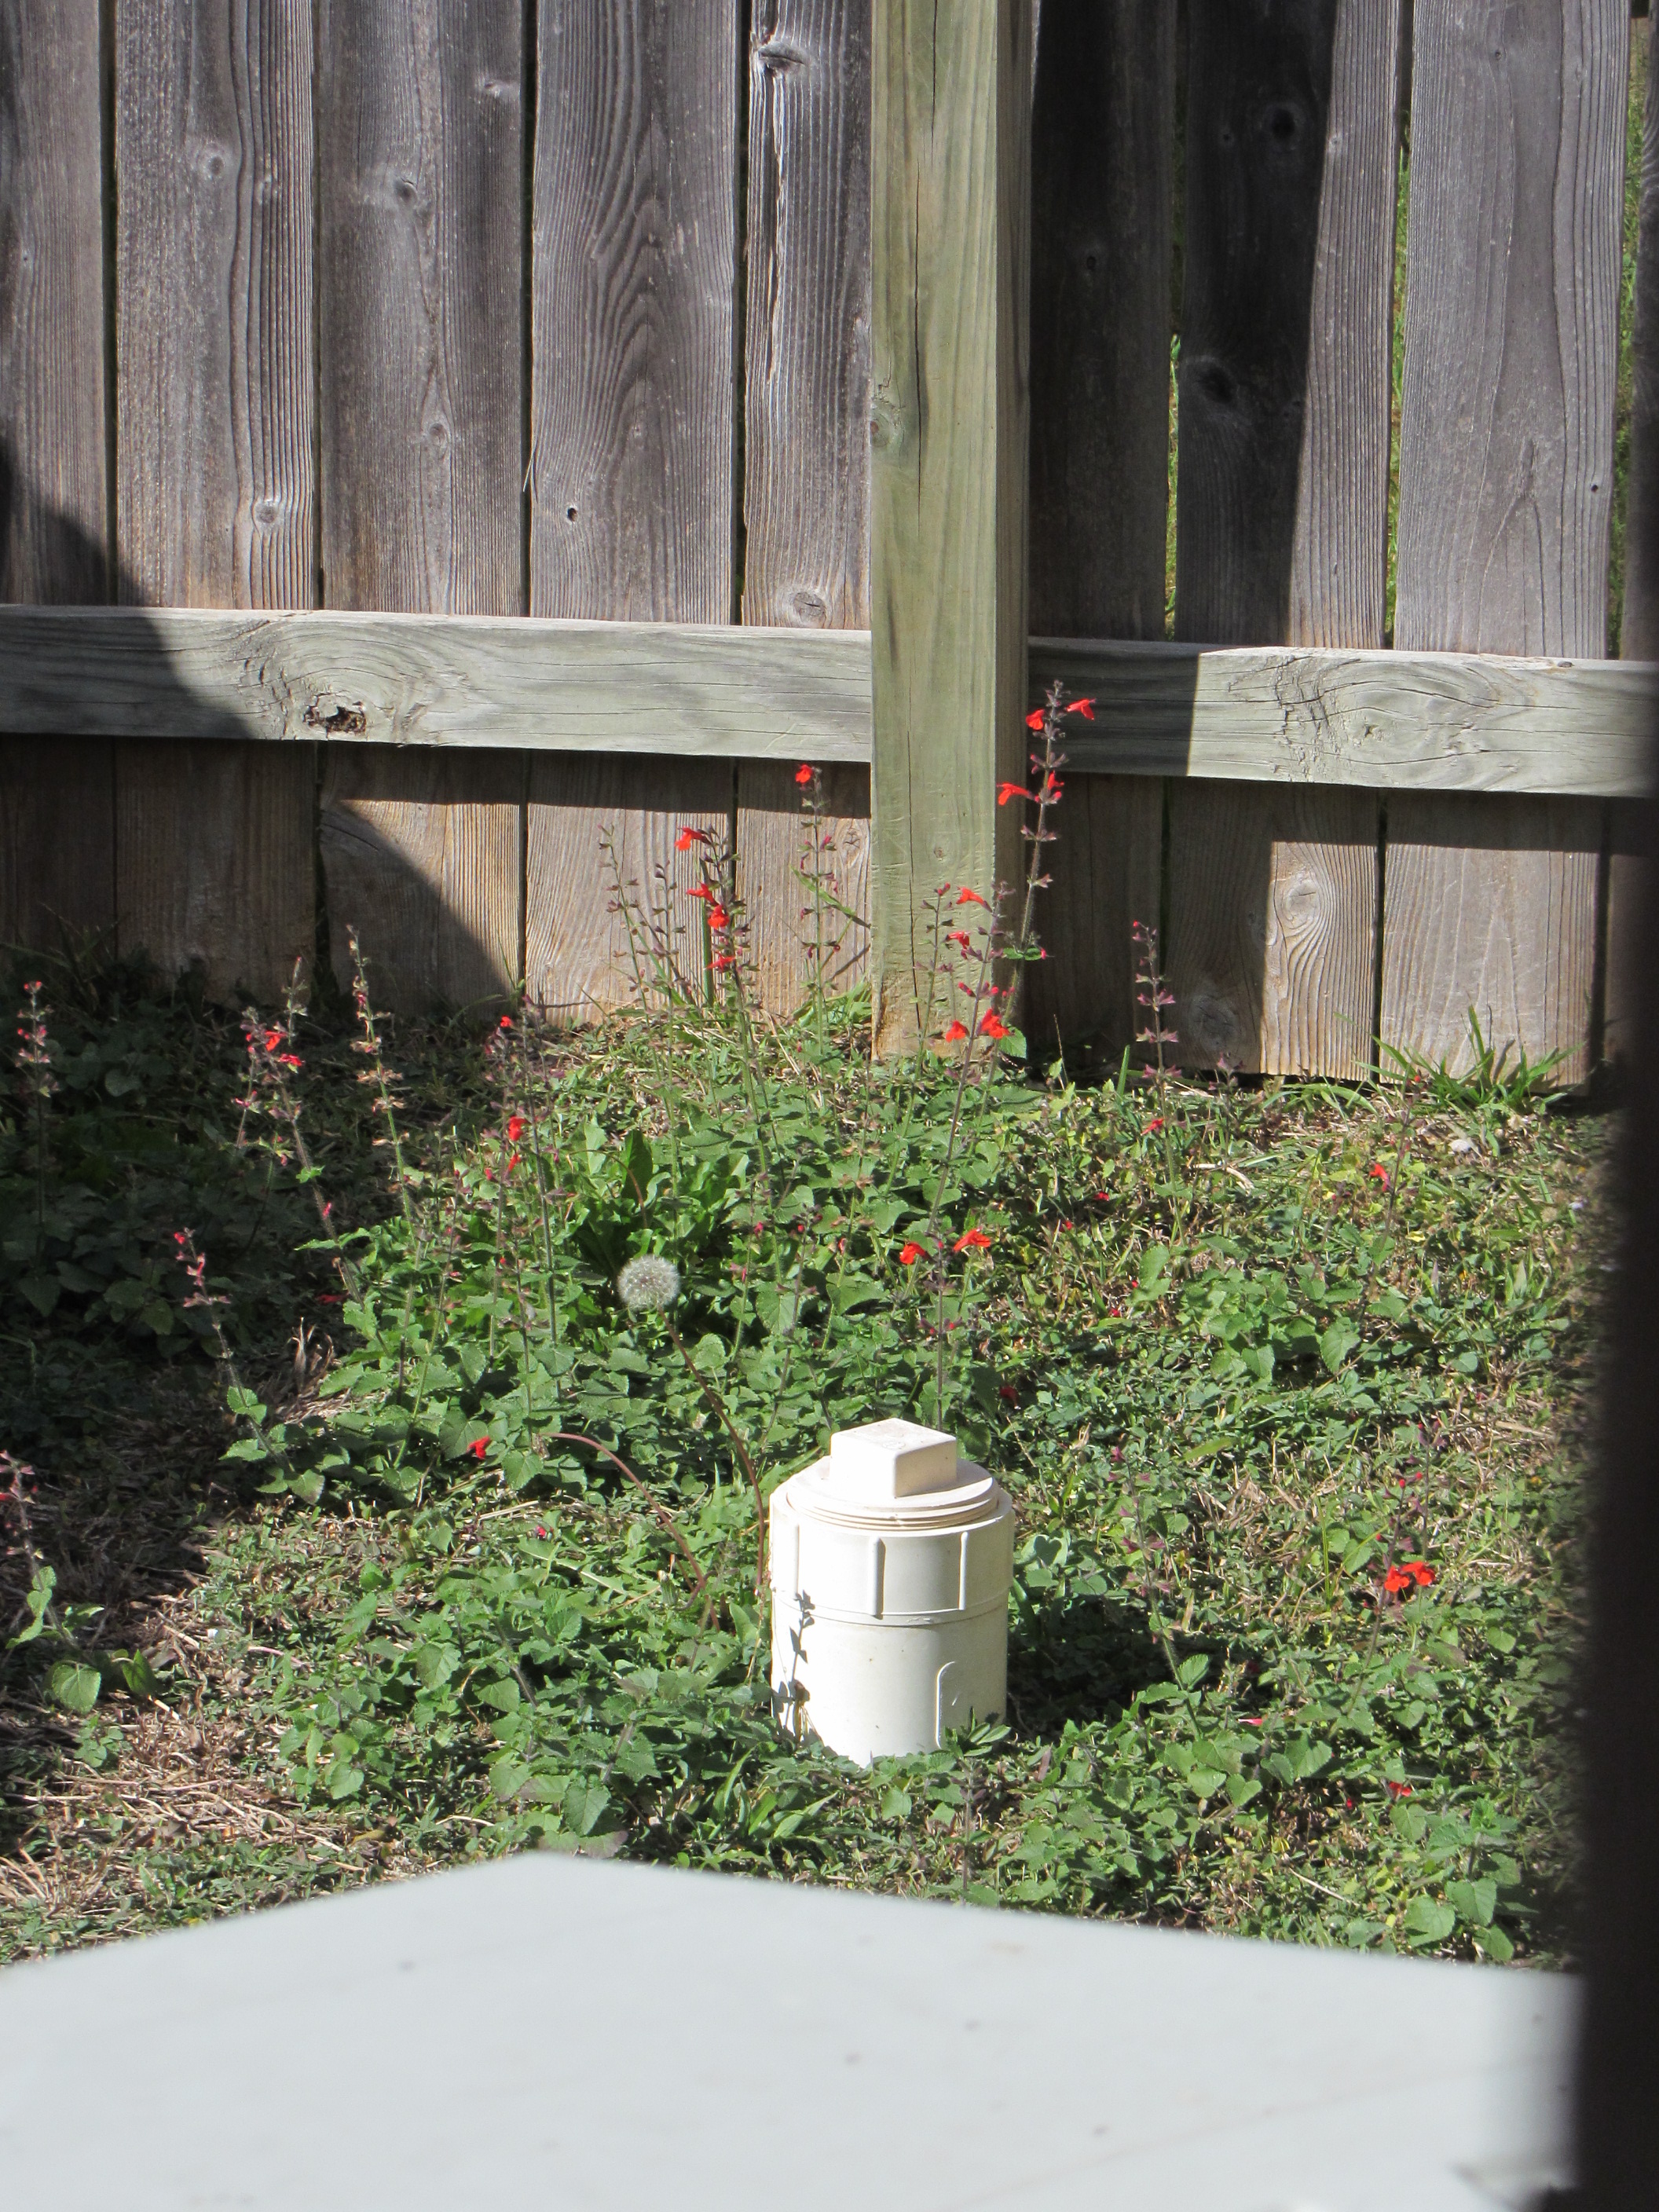 Salvia? growing in neighbors yard